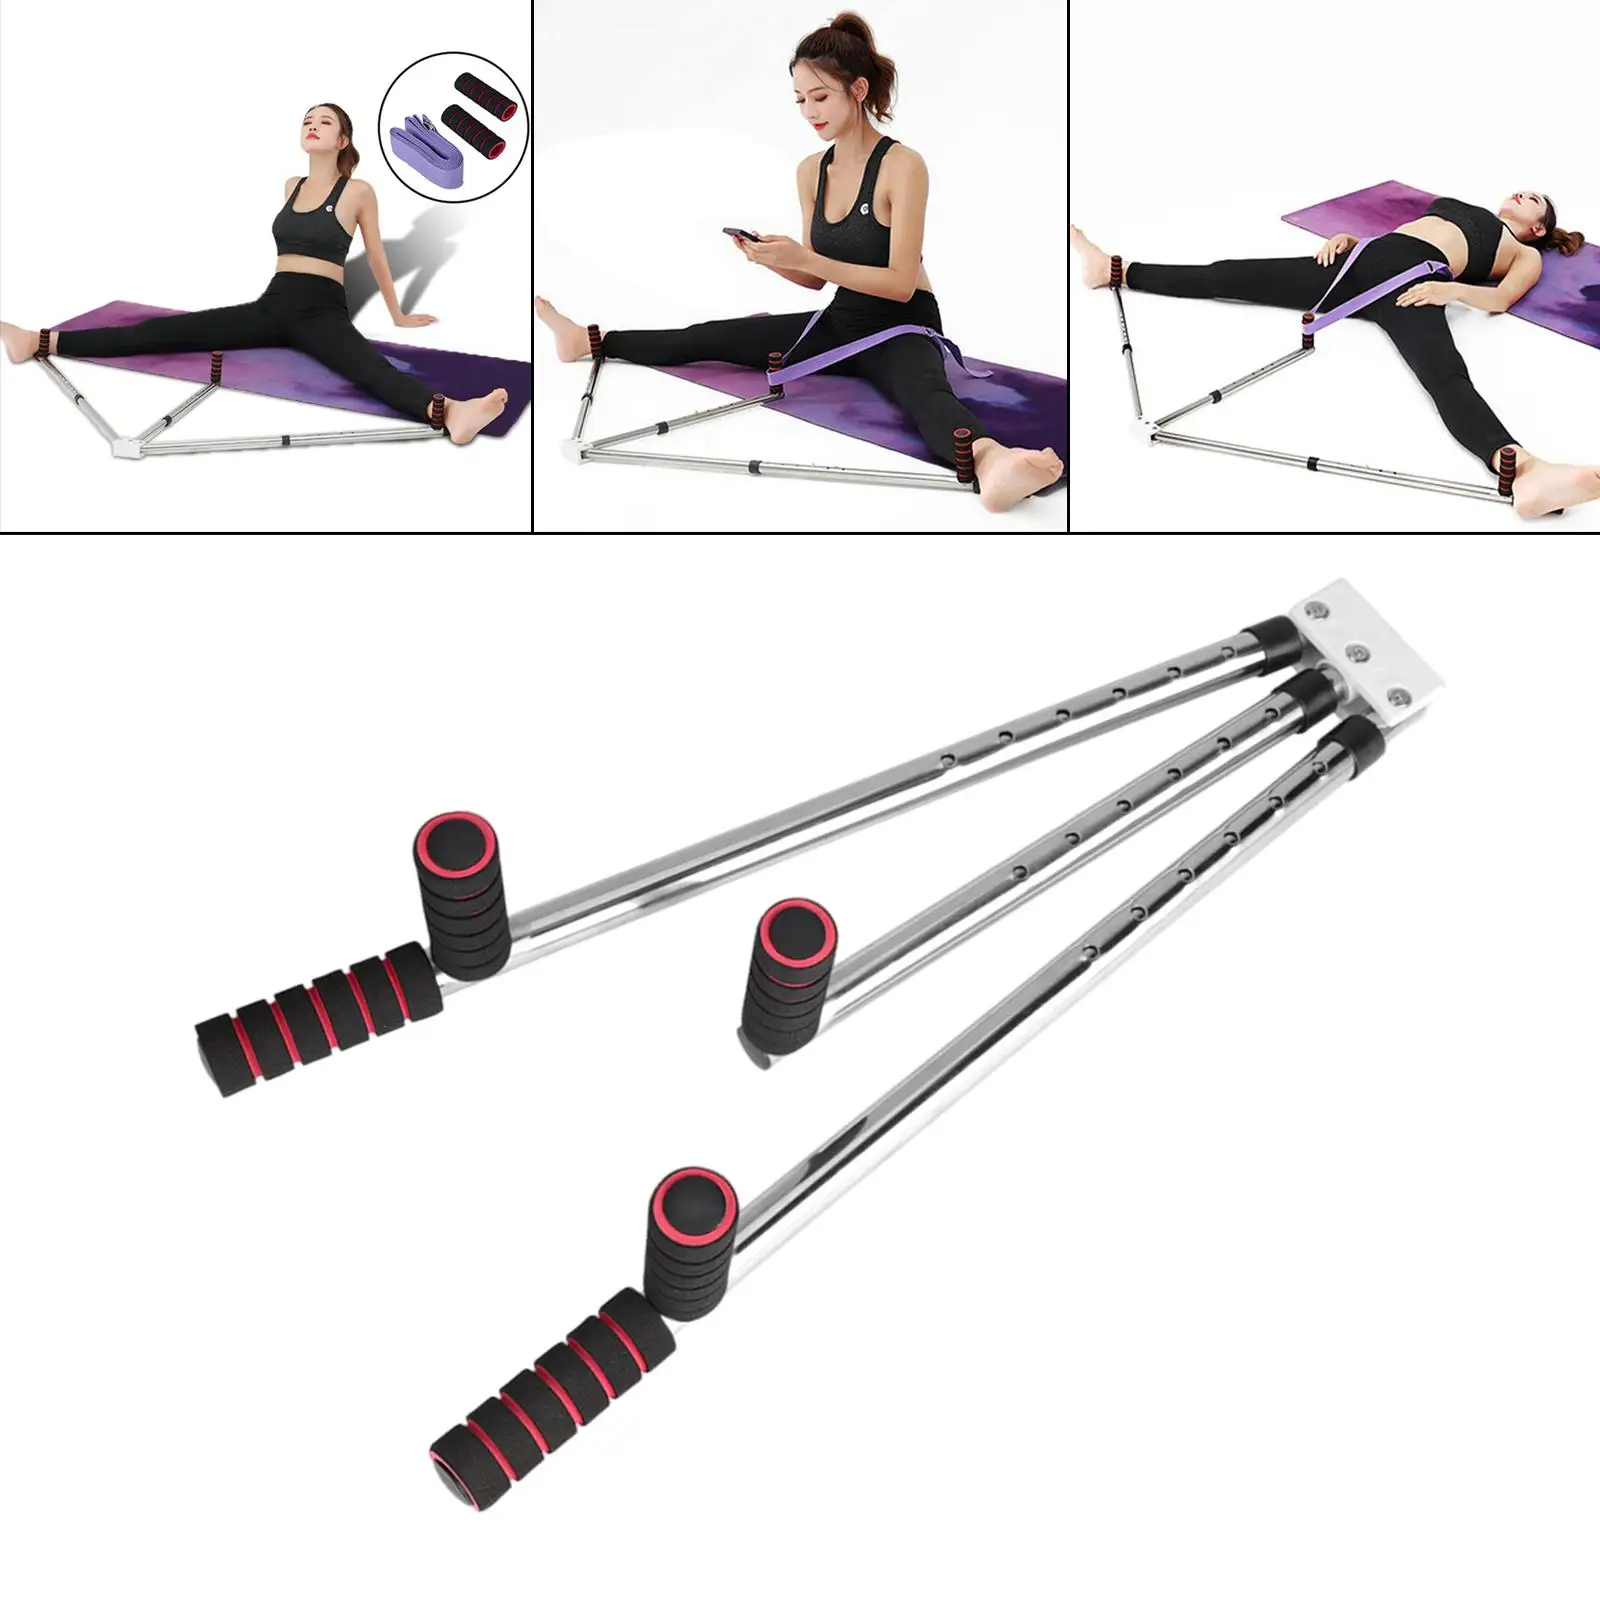 3 Bar Leg Stretcher Martial Arts Split Machine for Training Gymnastics Dance